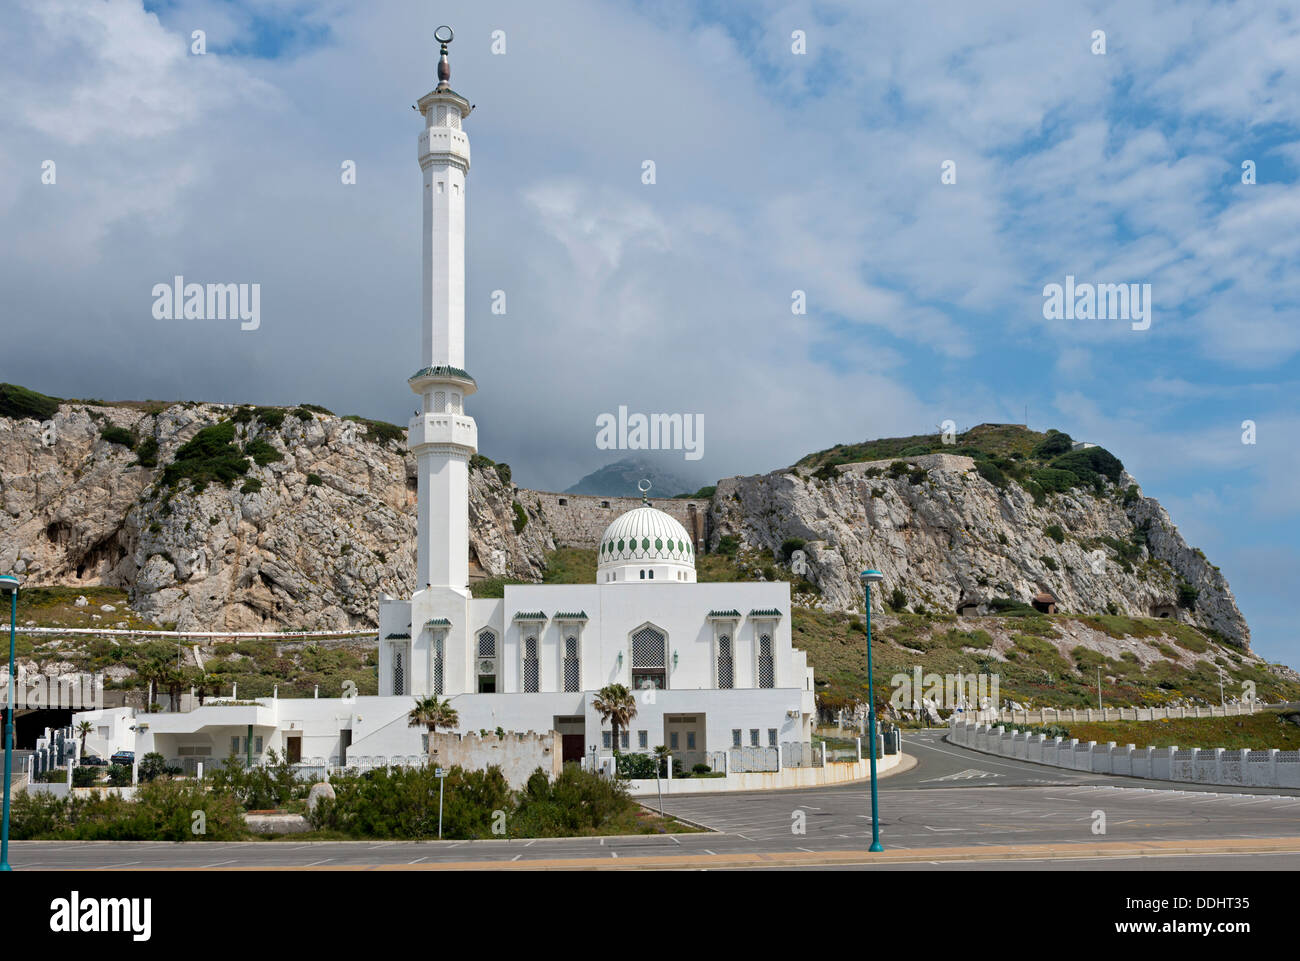 Ibrahim-al-Ibrahim Mosque at Europa Point Stock Photo